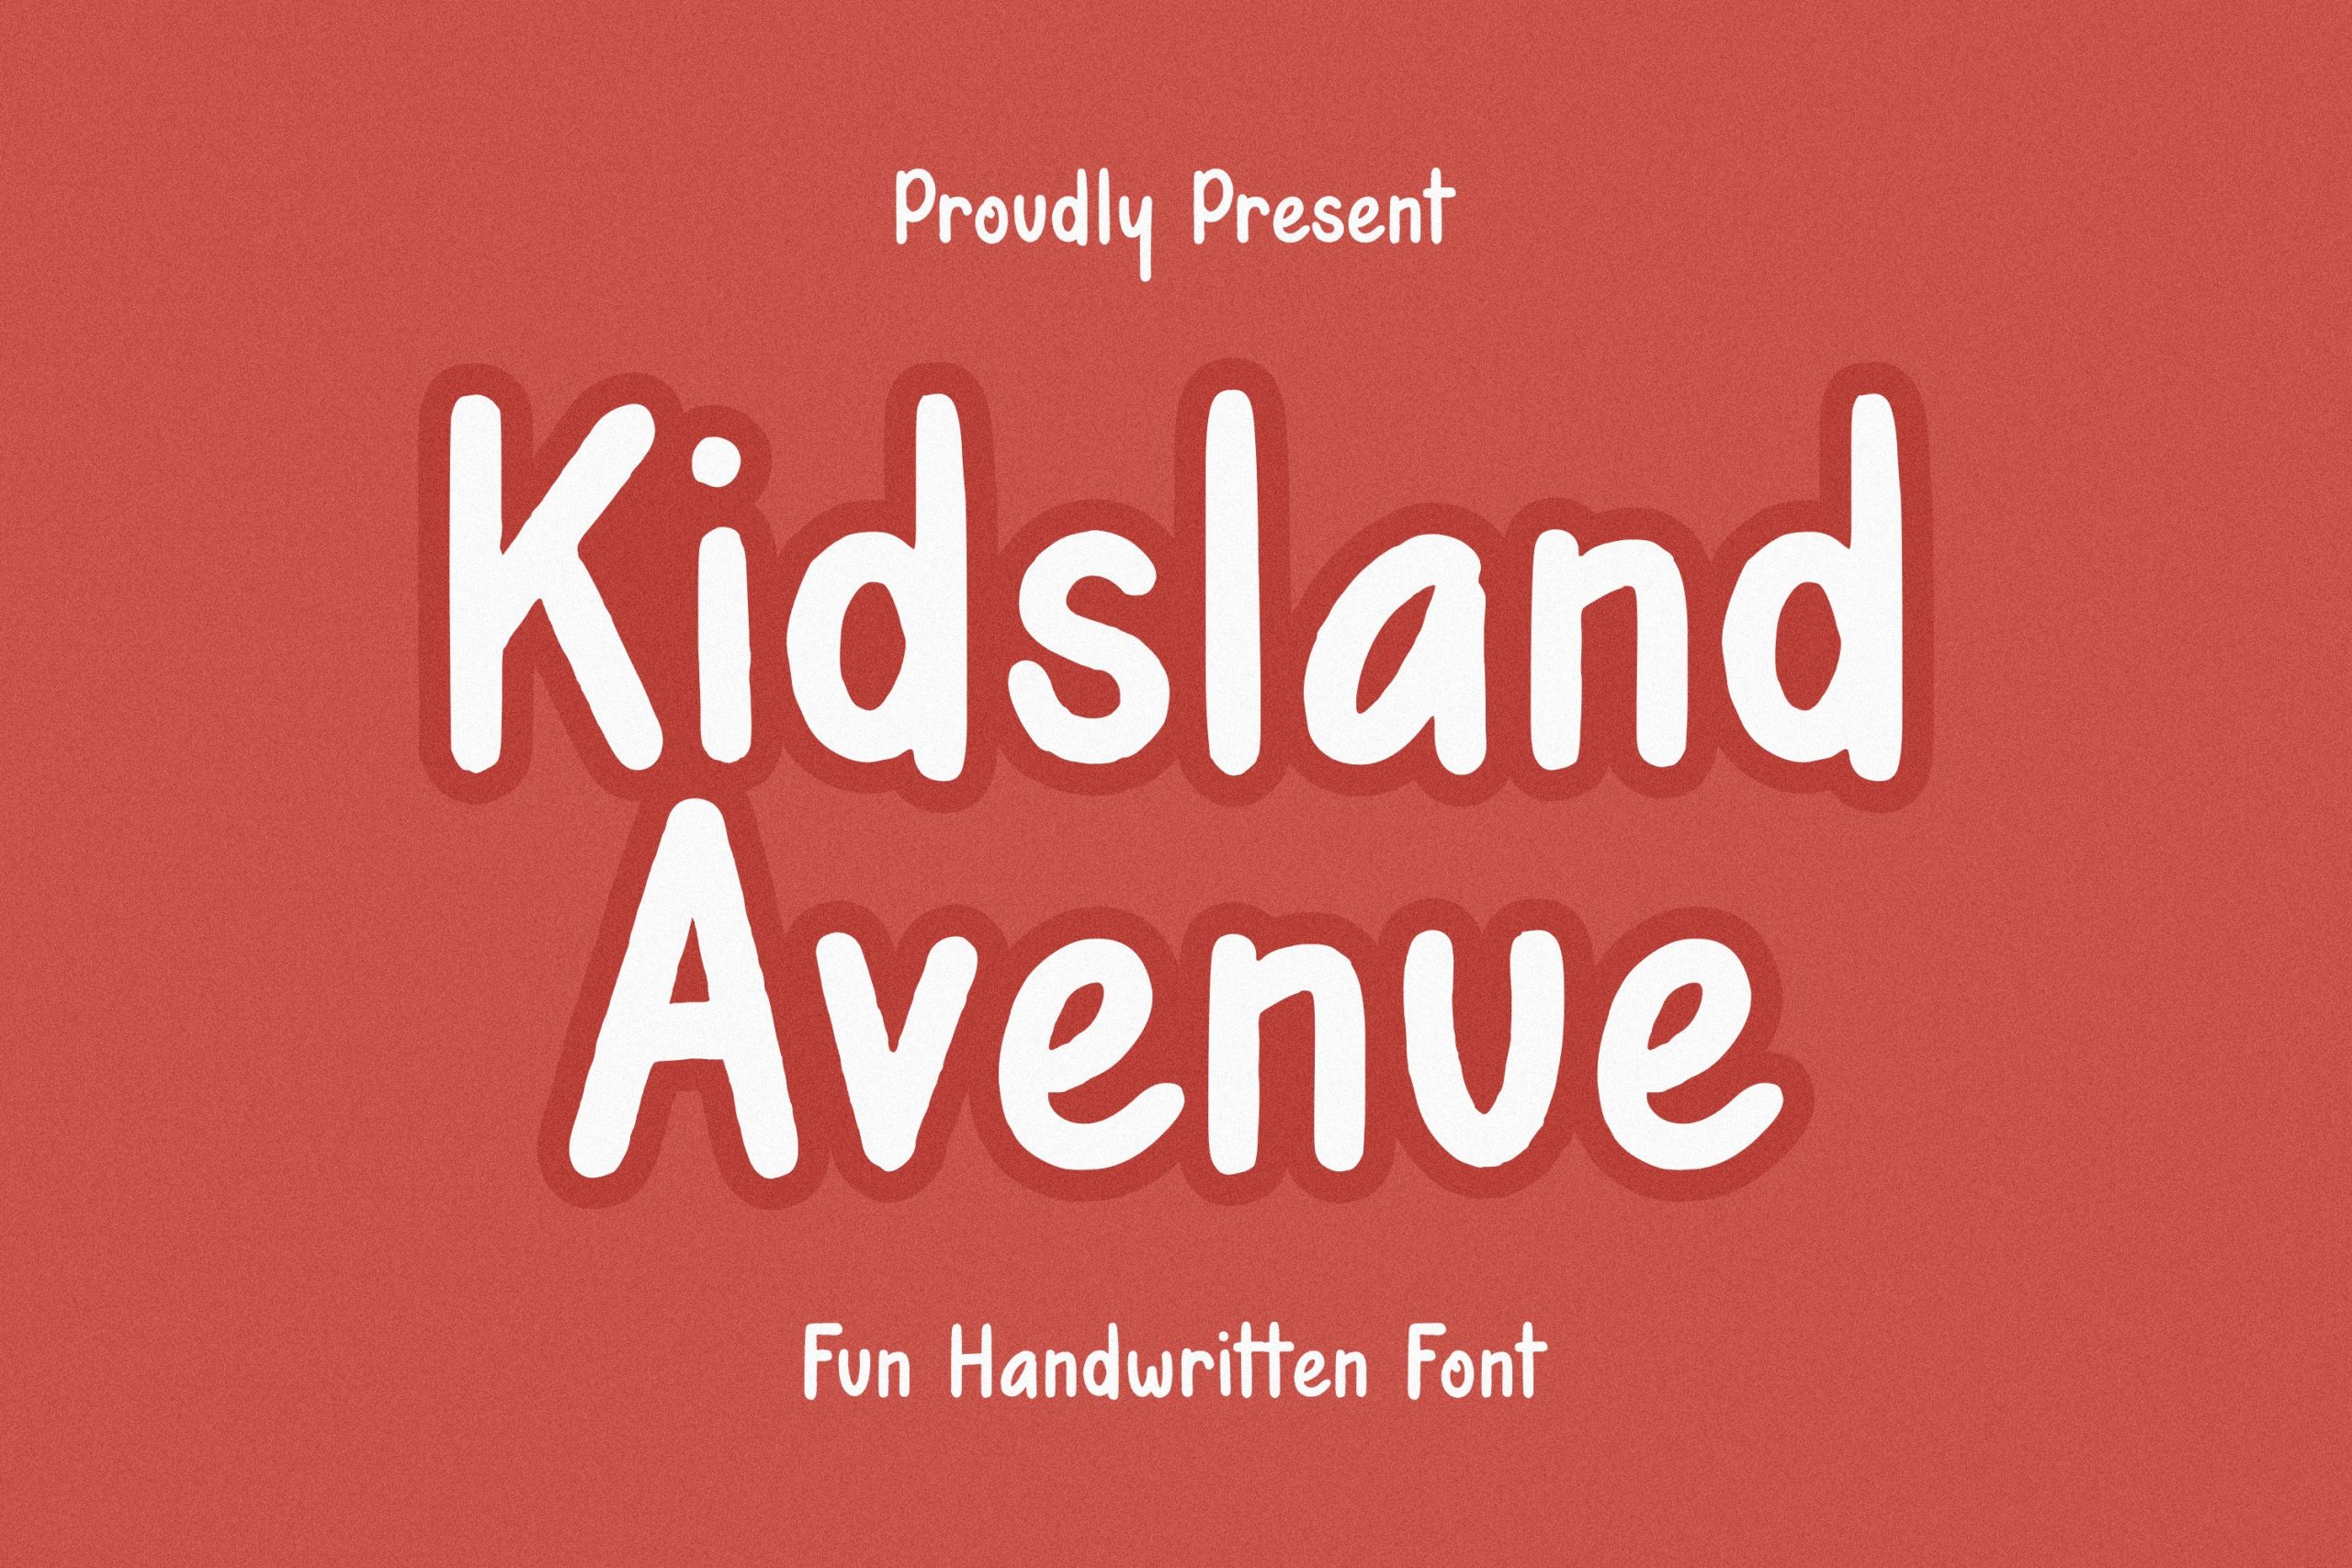 Kidsland Avenue Free Font